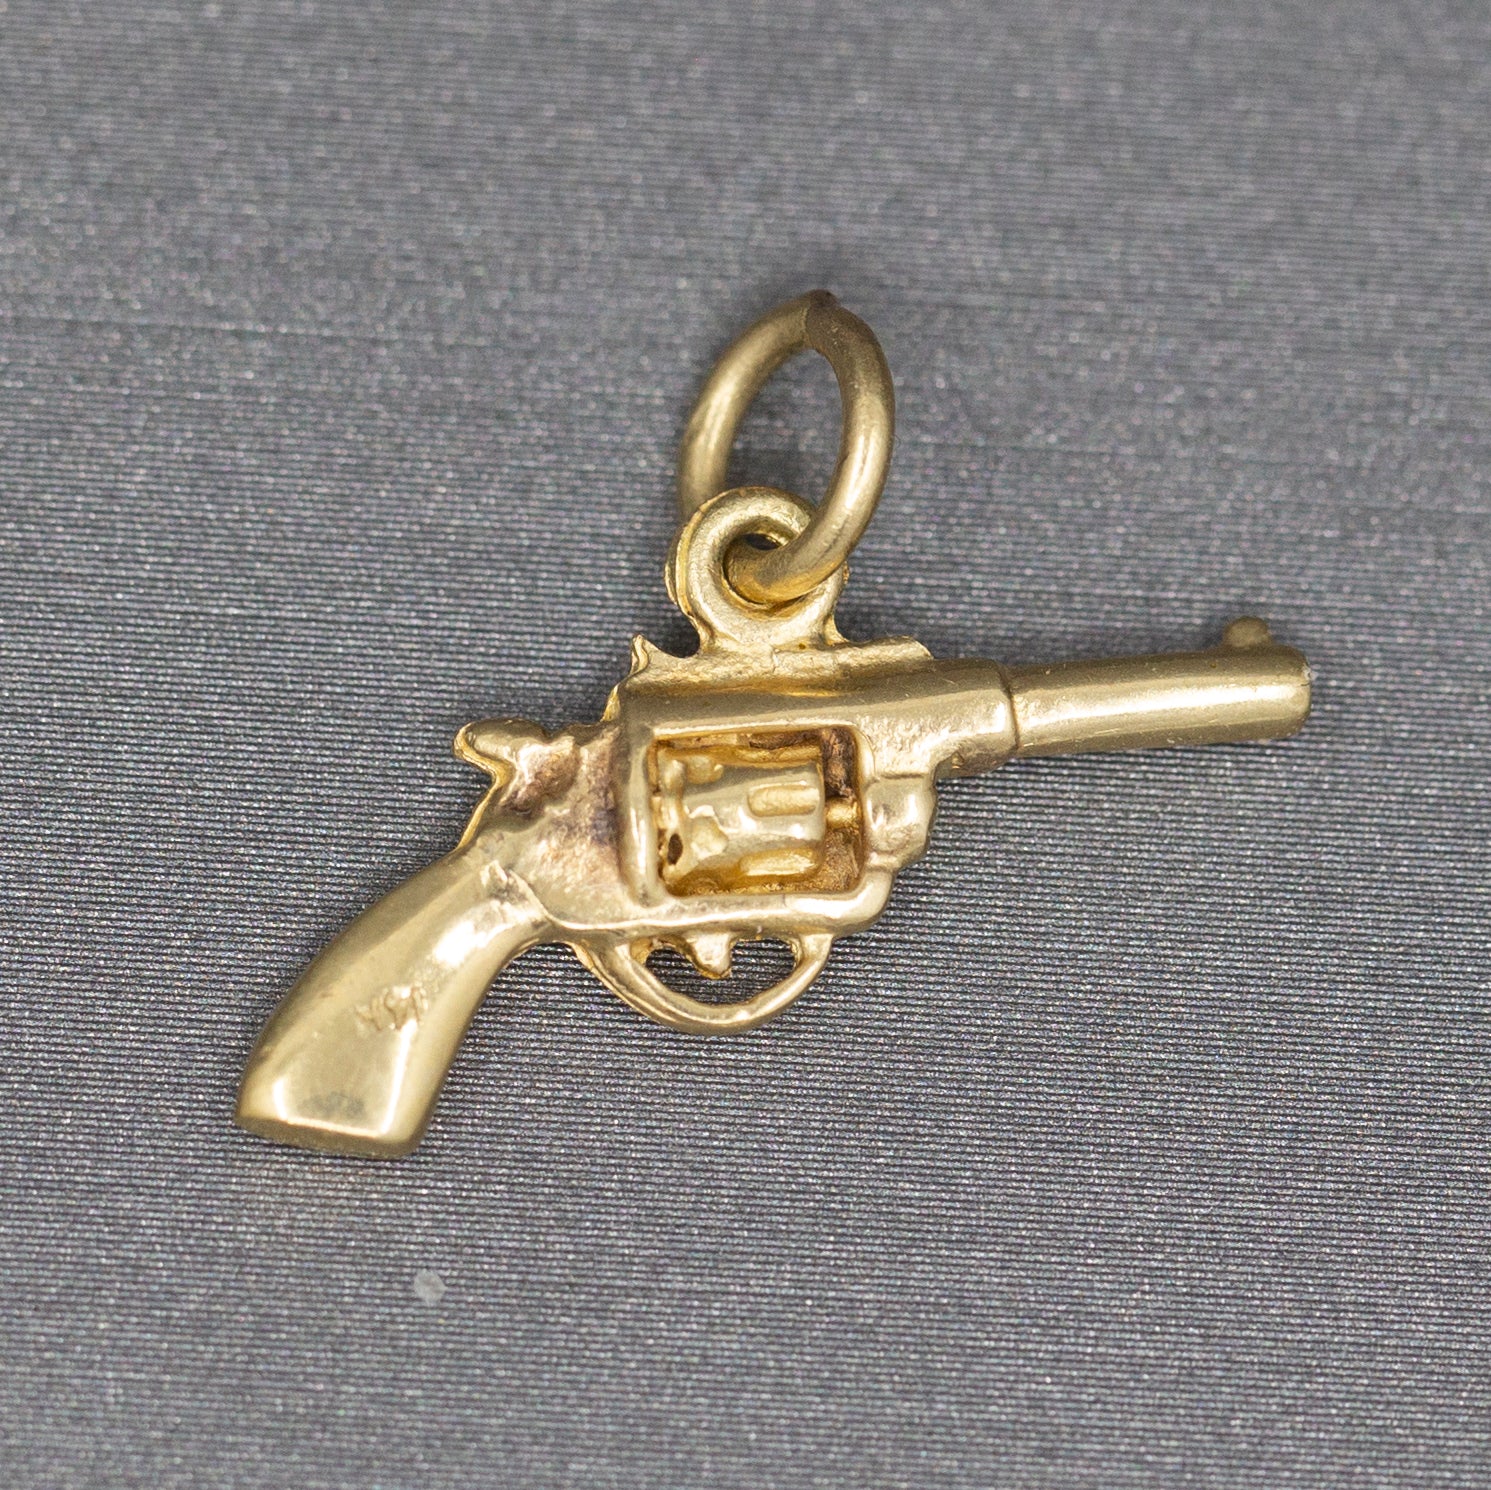 Vintage Revolver Pistol Handgun Gun Charm Pendant in 14k Yellow Gold